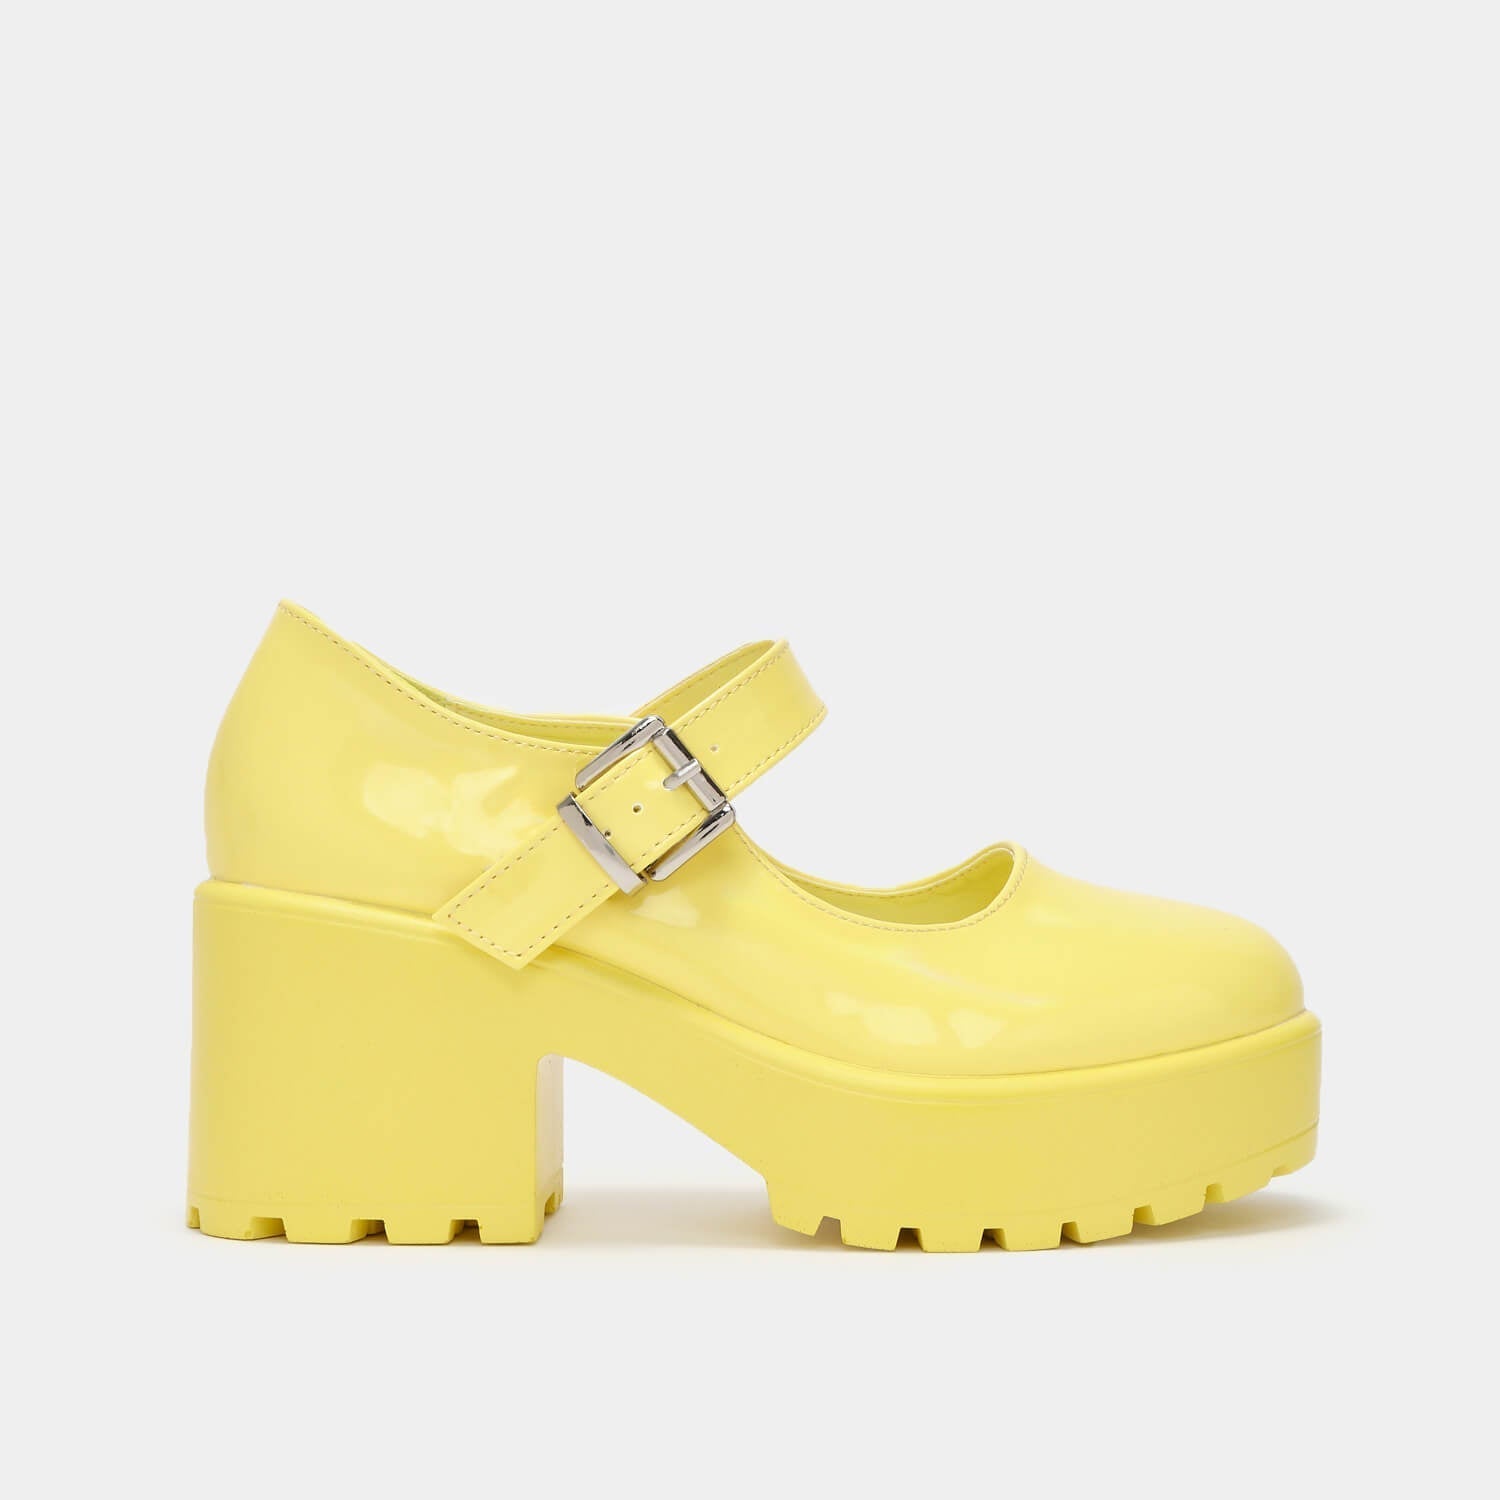 Tira Mary Jane Shoes 'Sunshine Yellow Edition' - Mary Janes - KOI Footwear - Yellow - Model View